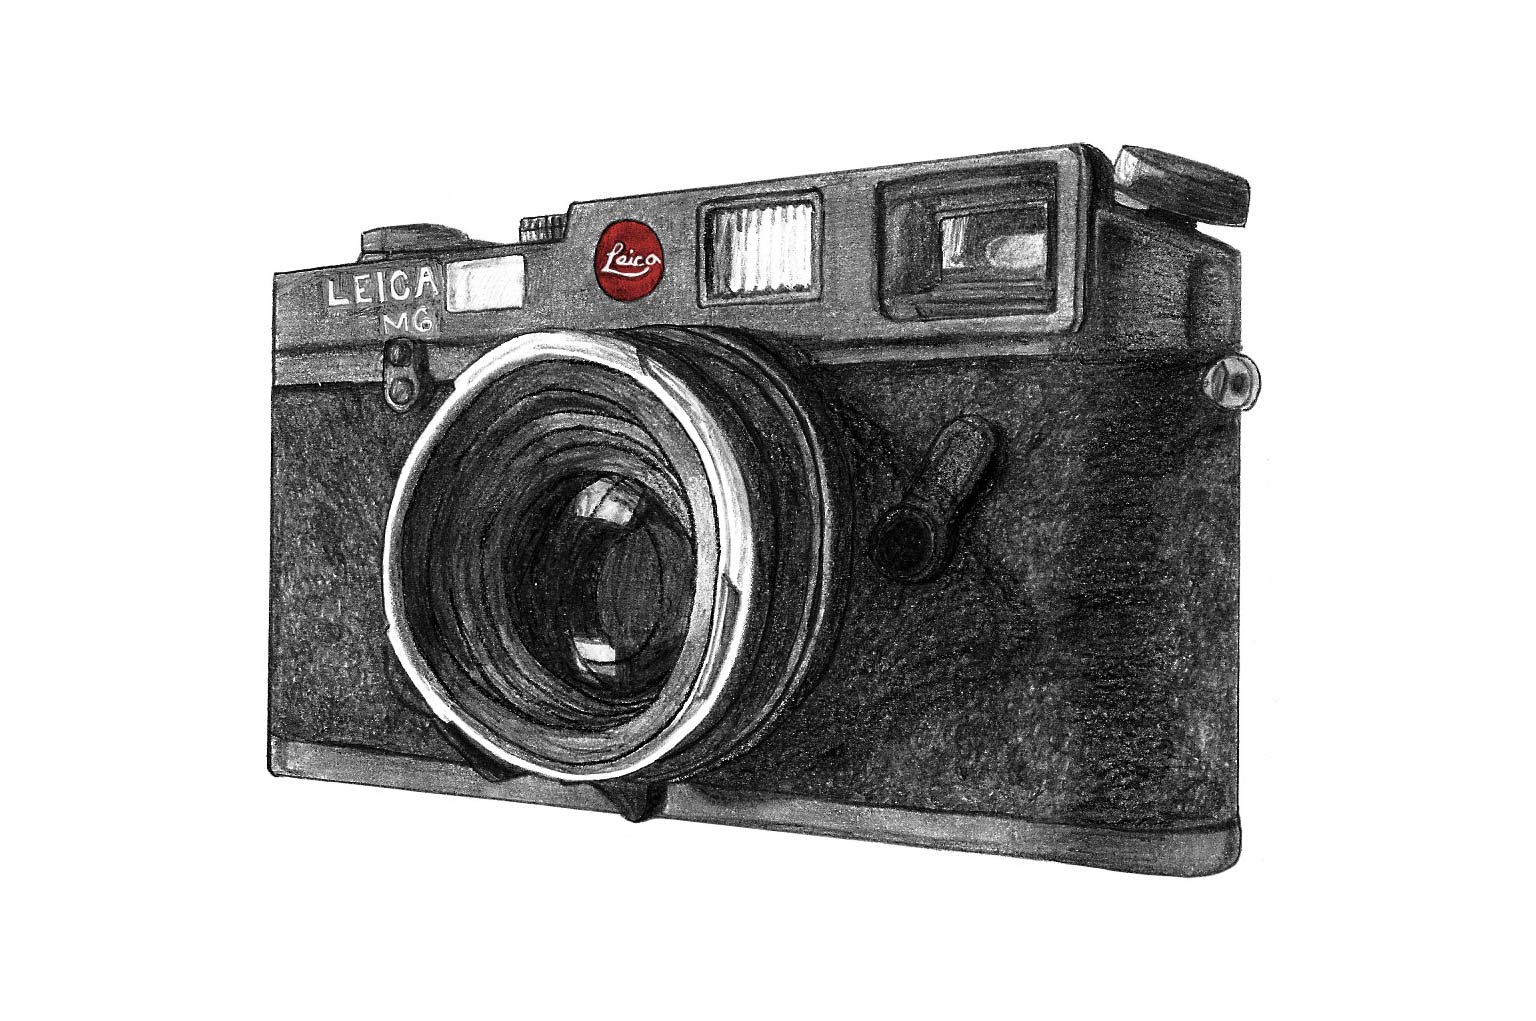 Leica M6 Camera Illustration